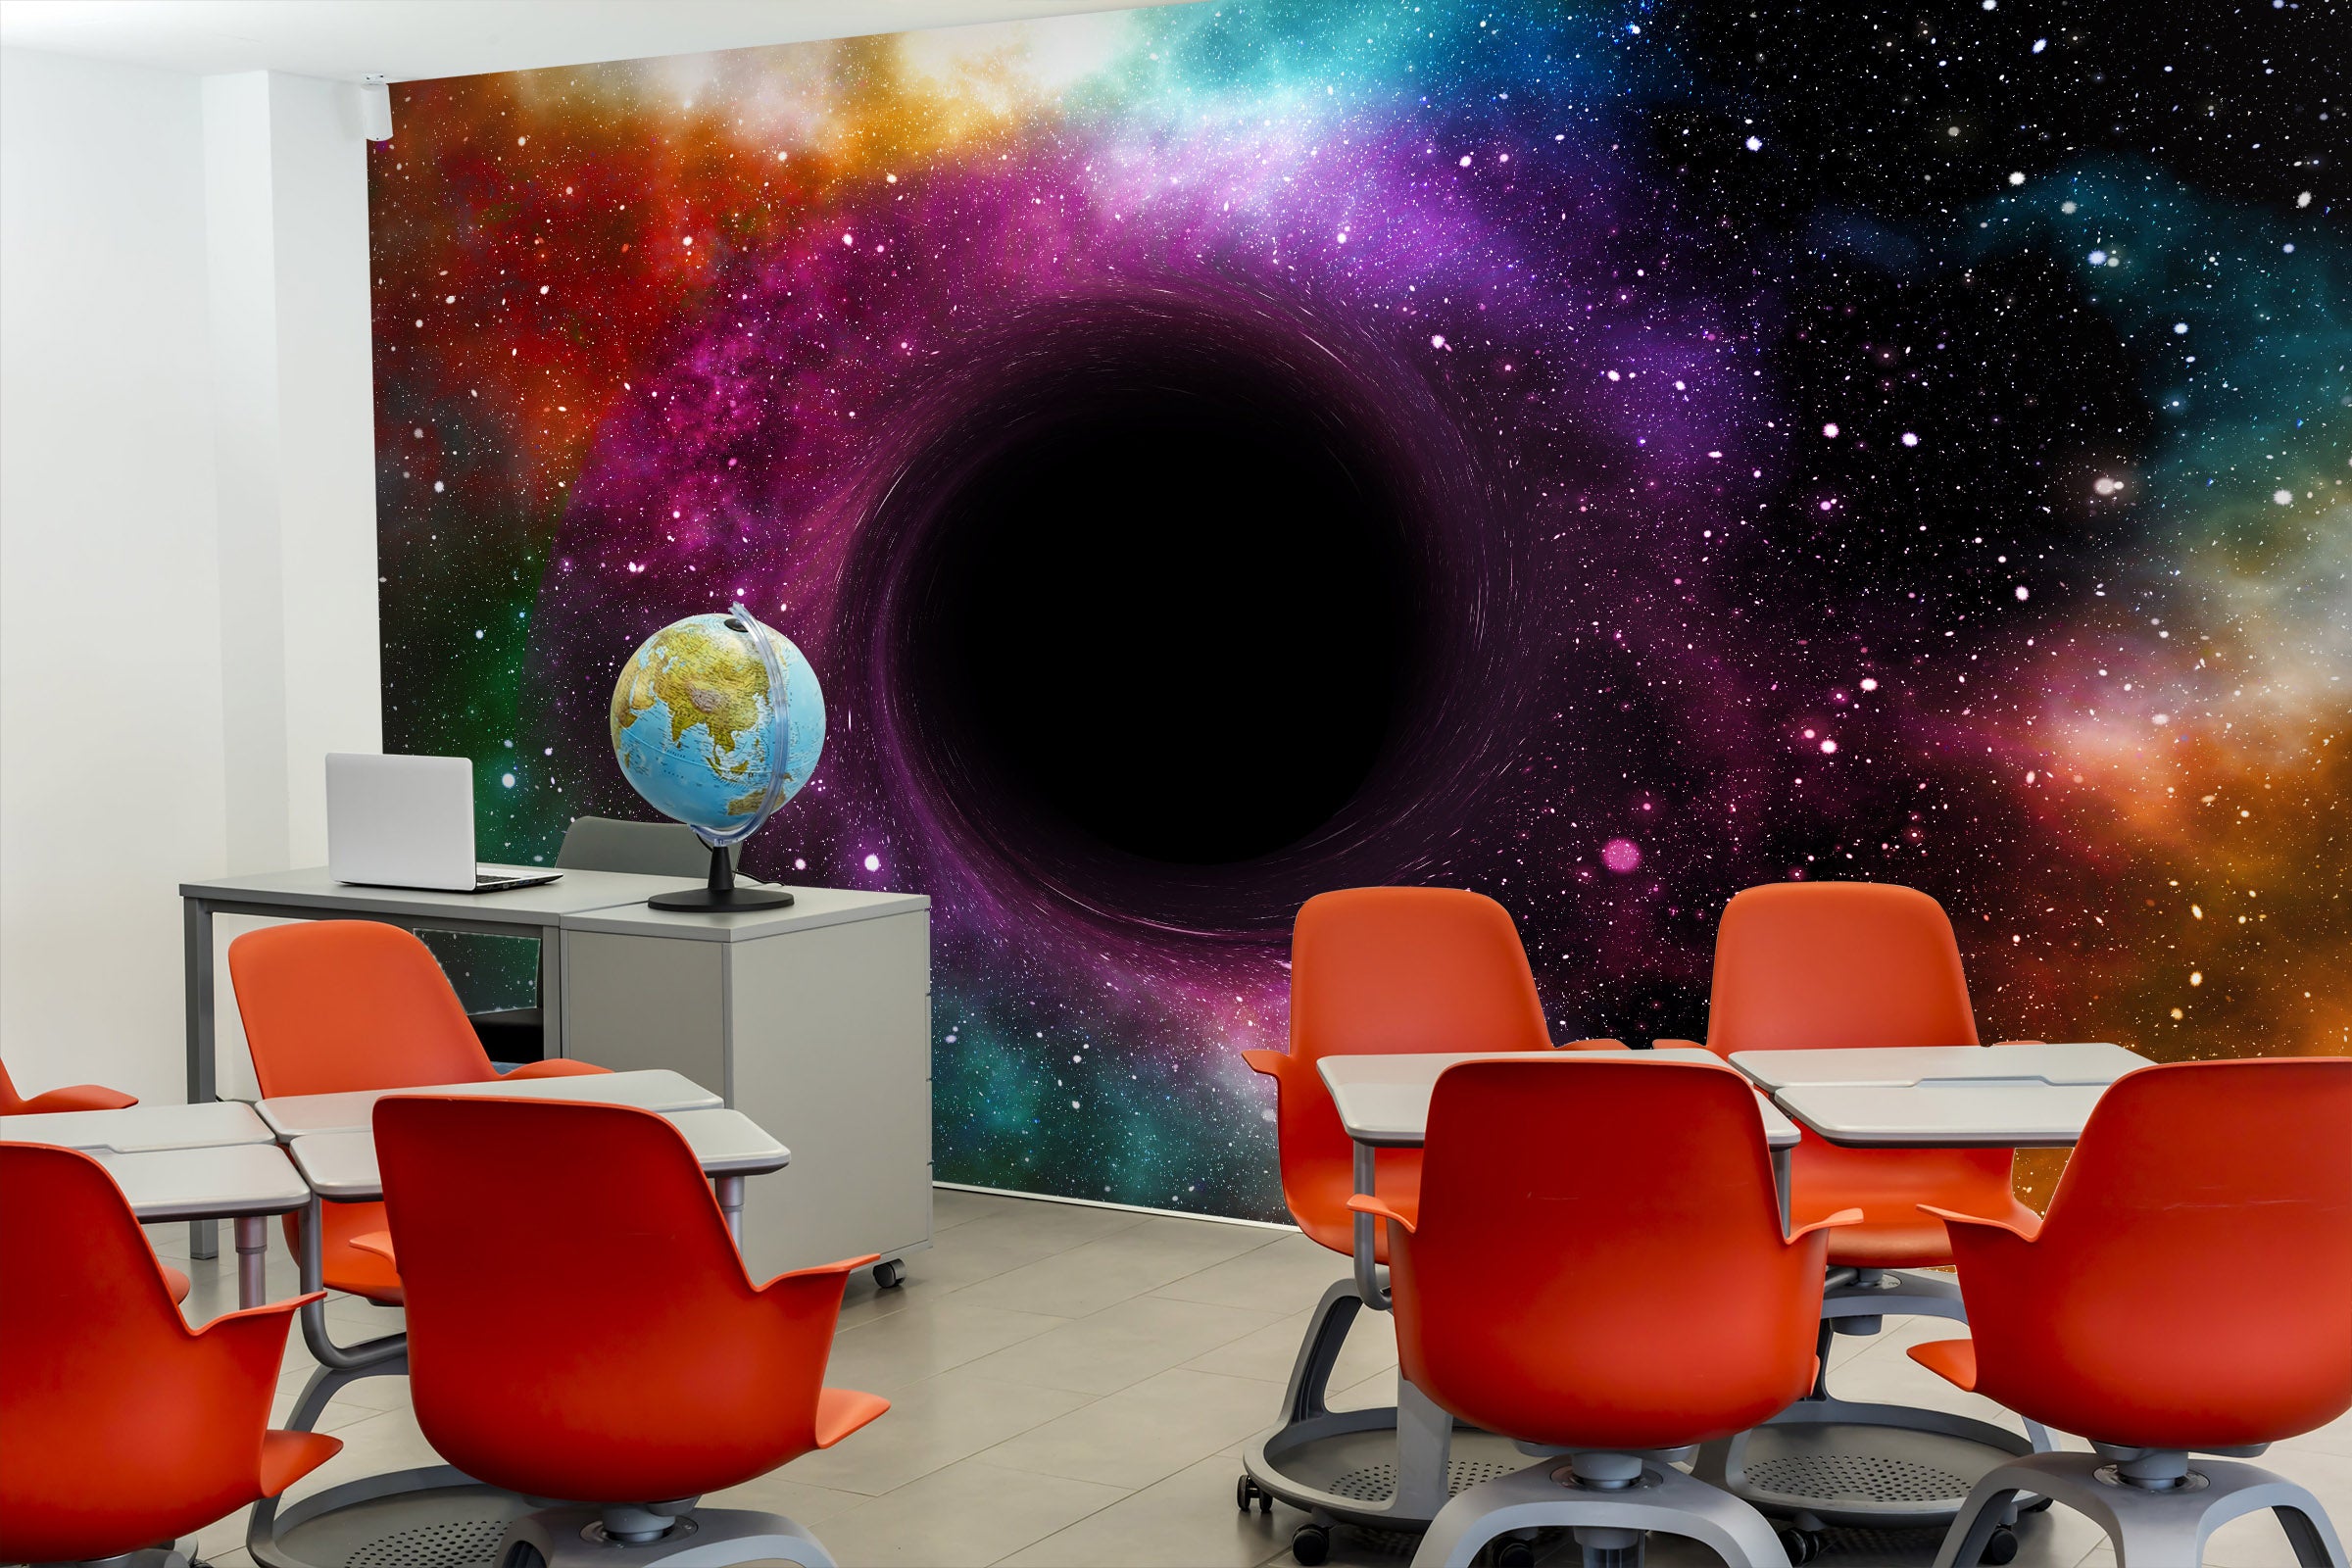 3D Wormhole Stars 137 Wall Murals